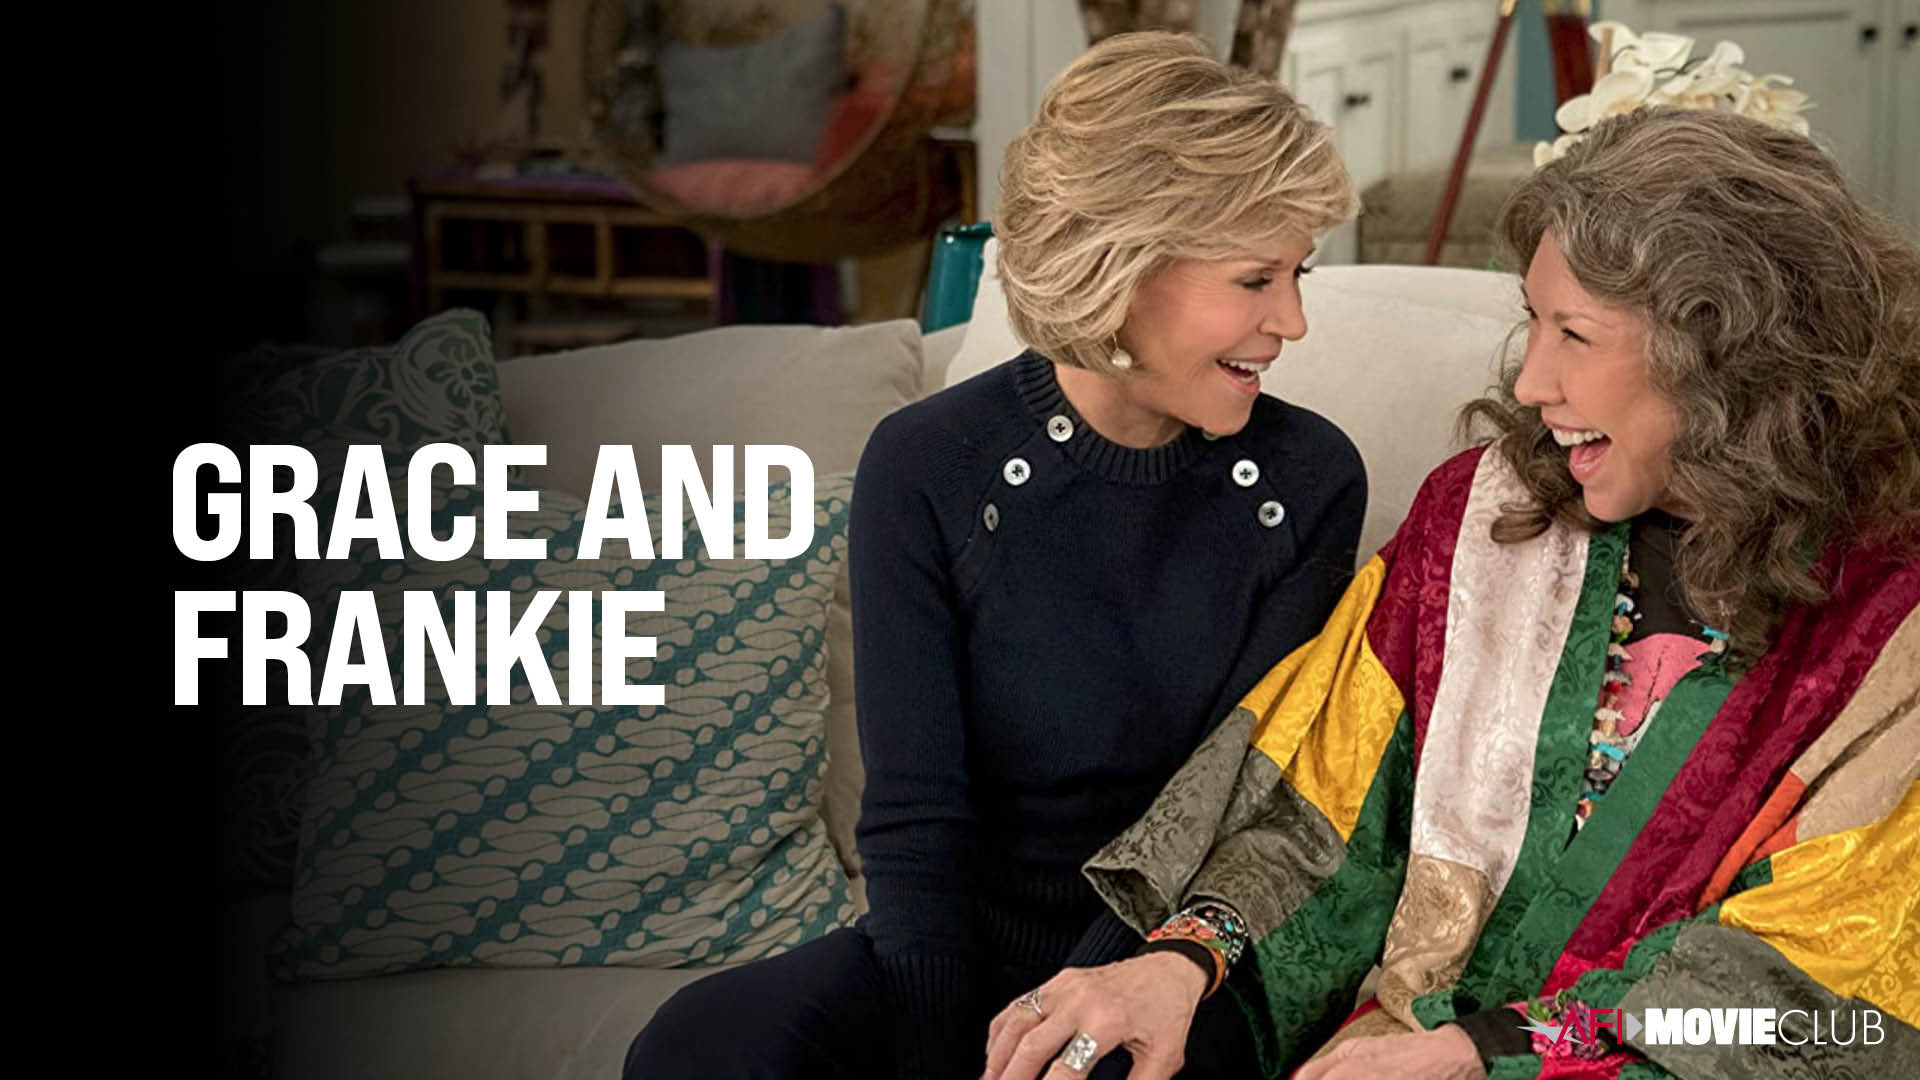 Grace and Frankie Film Still - Jane Fonda and Lily Tomlin